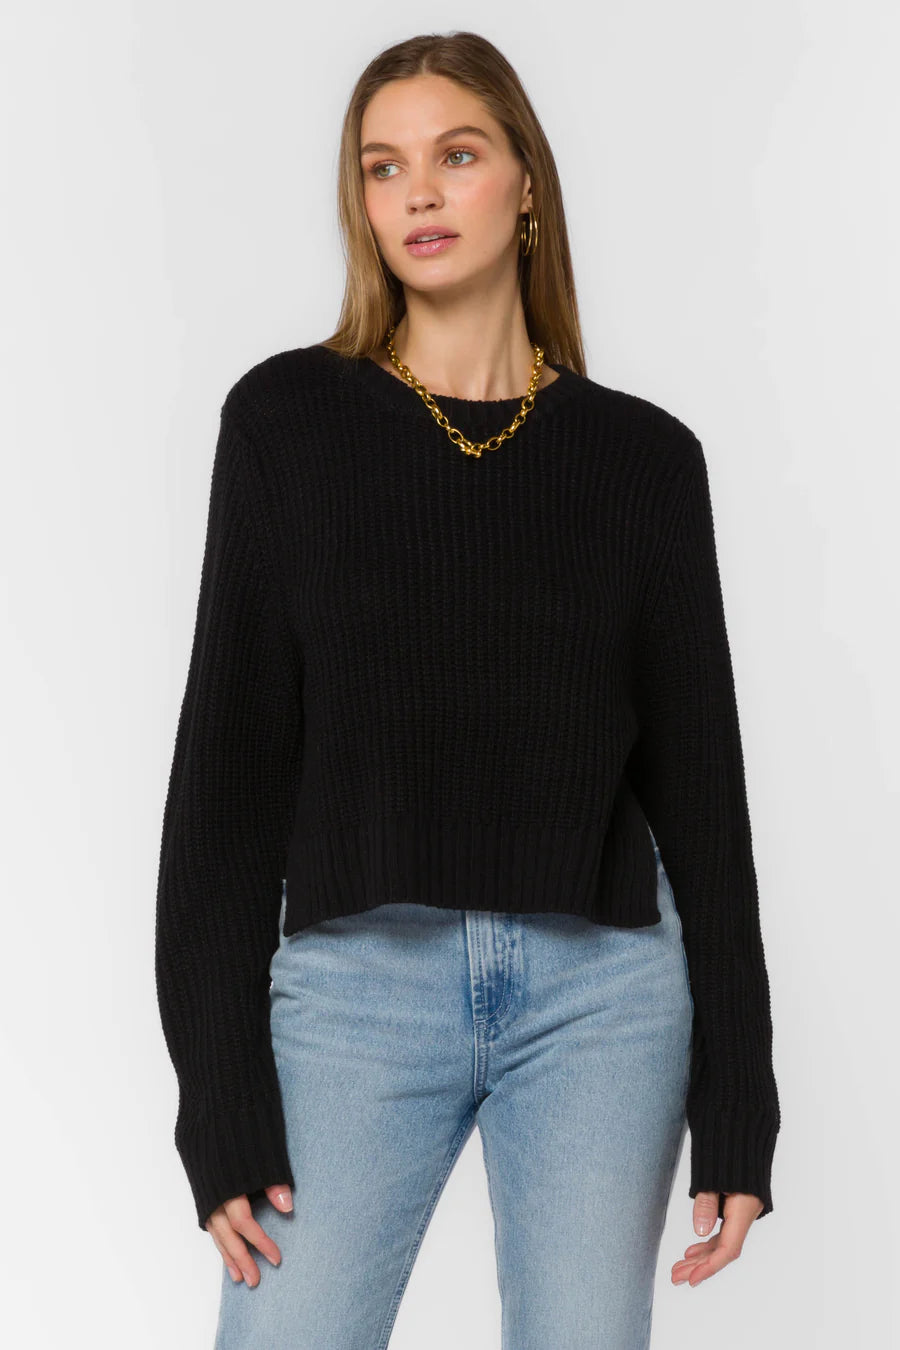 Korina Black Sweater